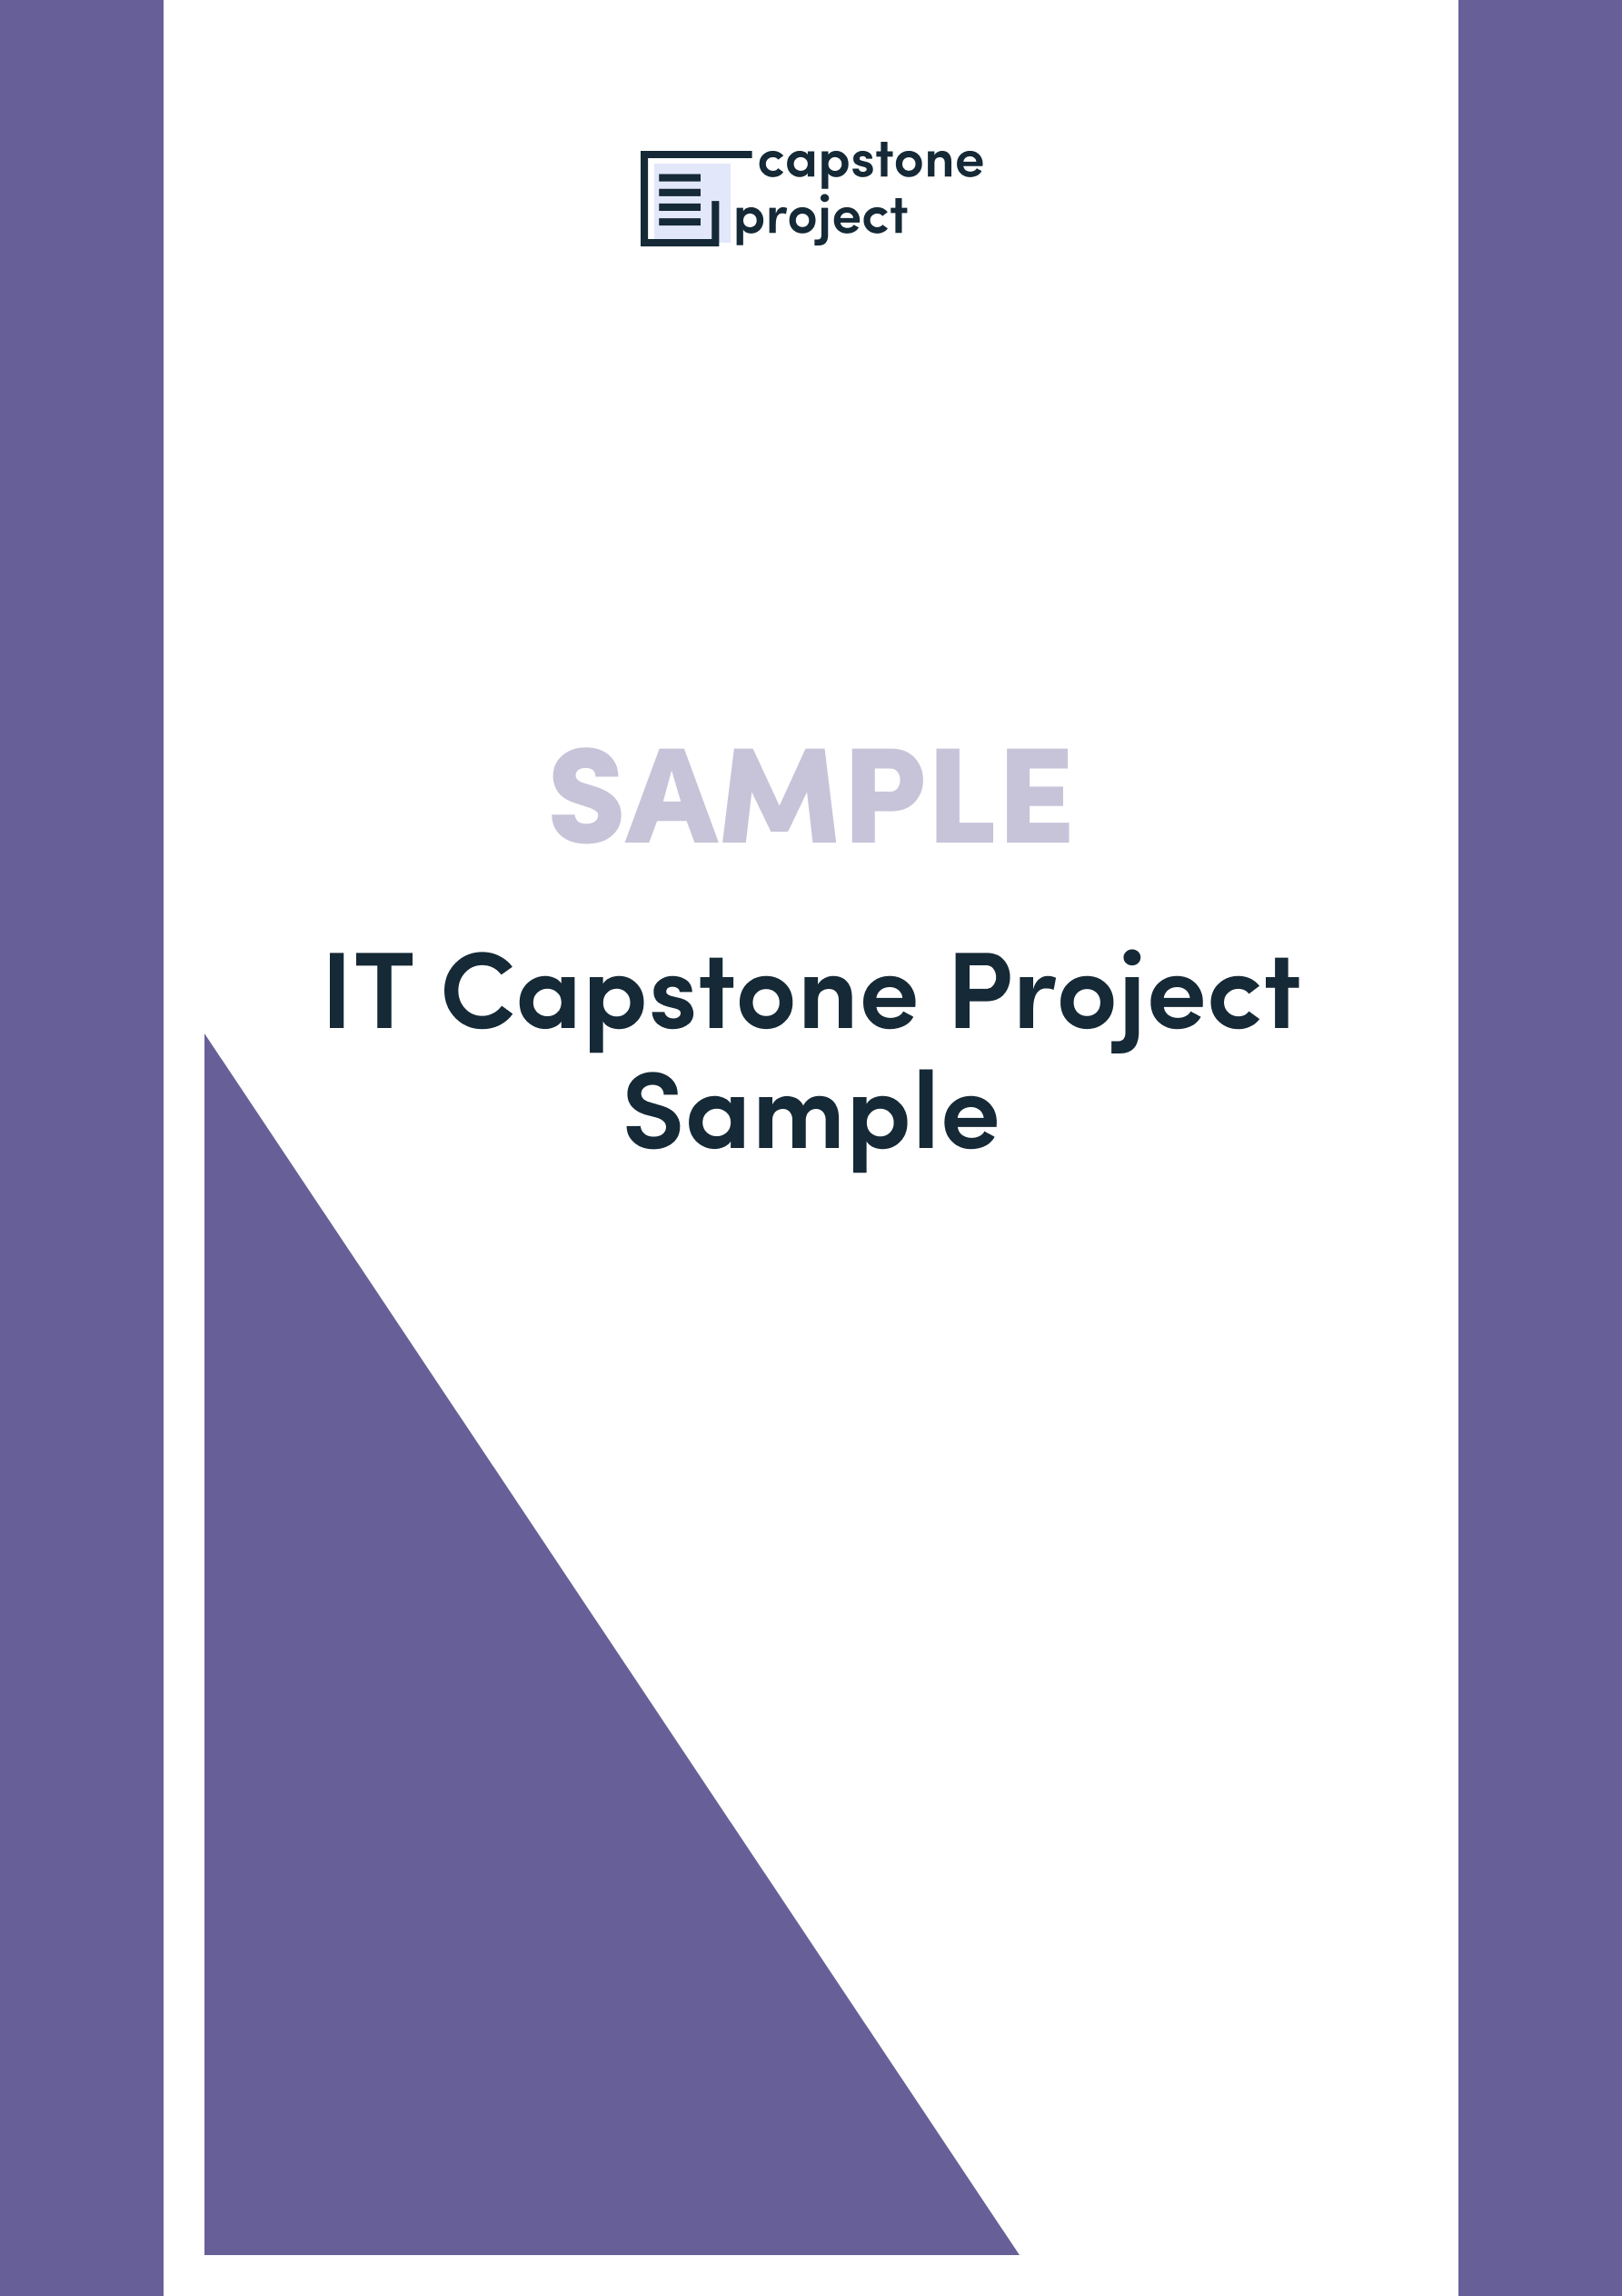 capstone project generator